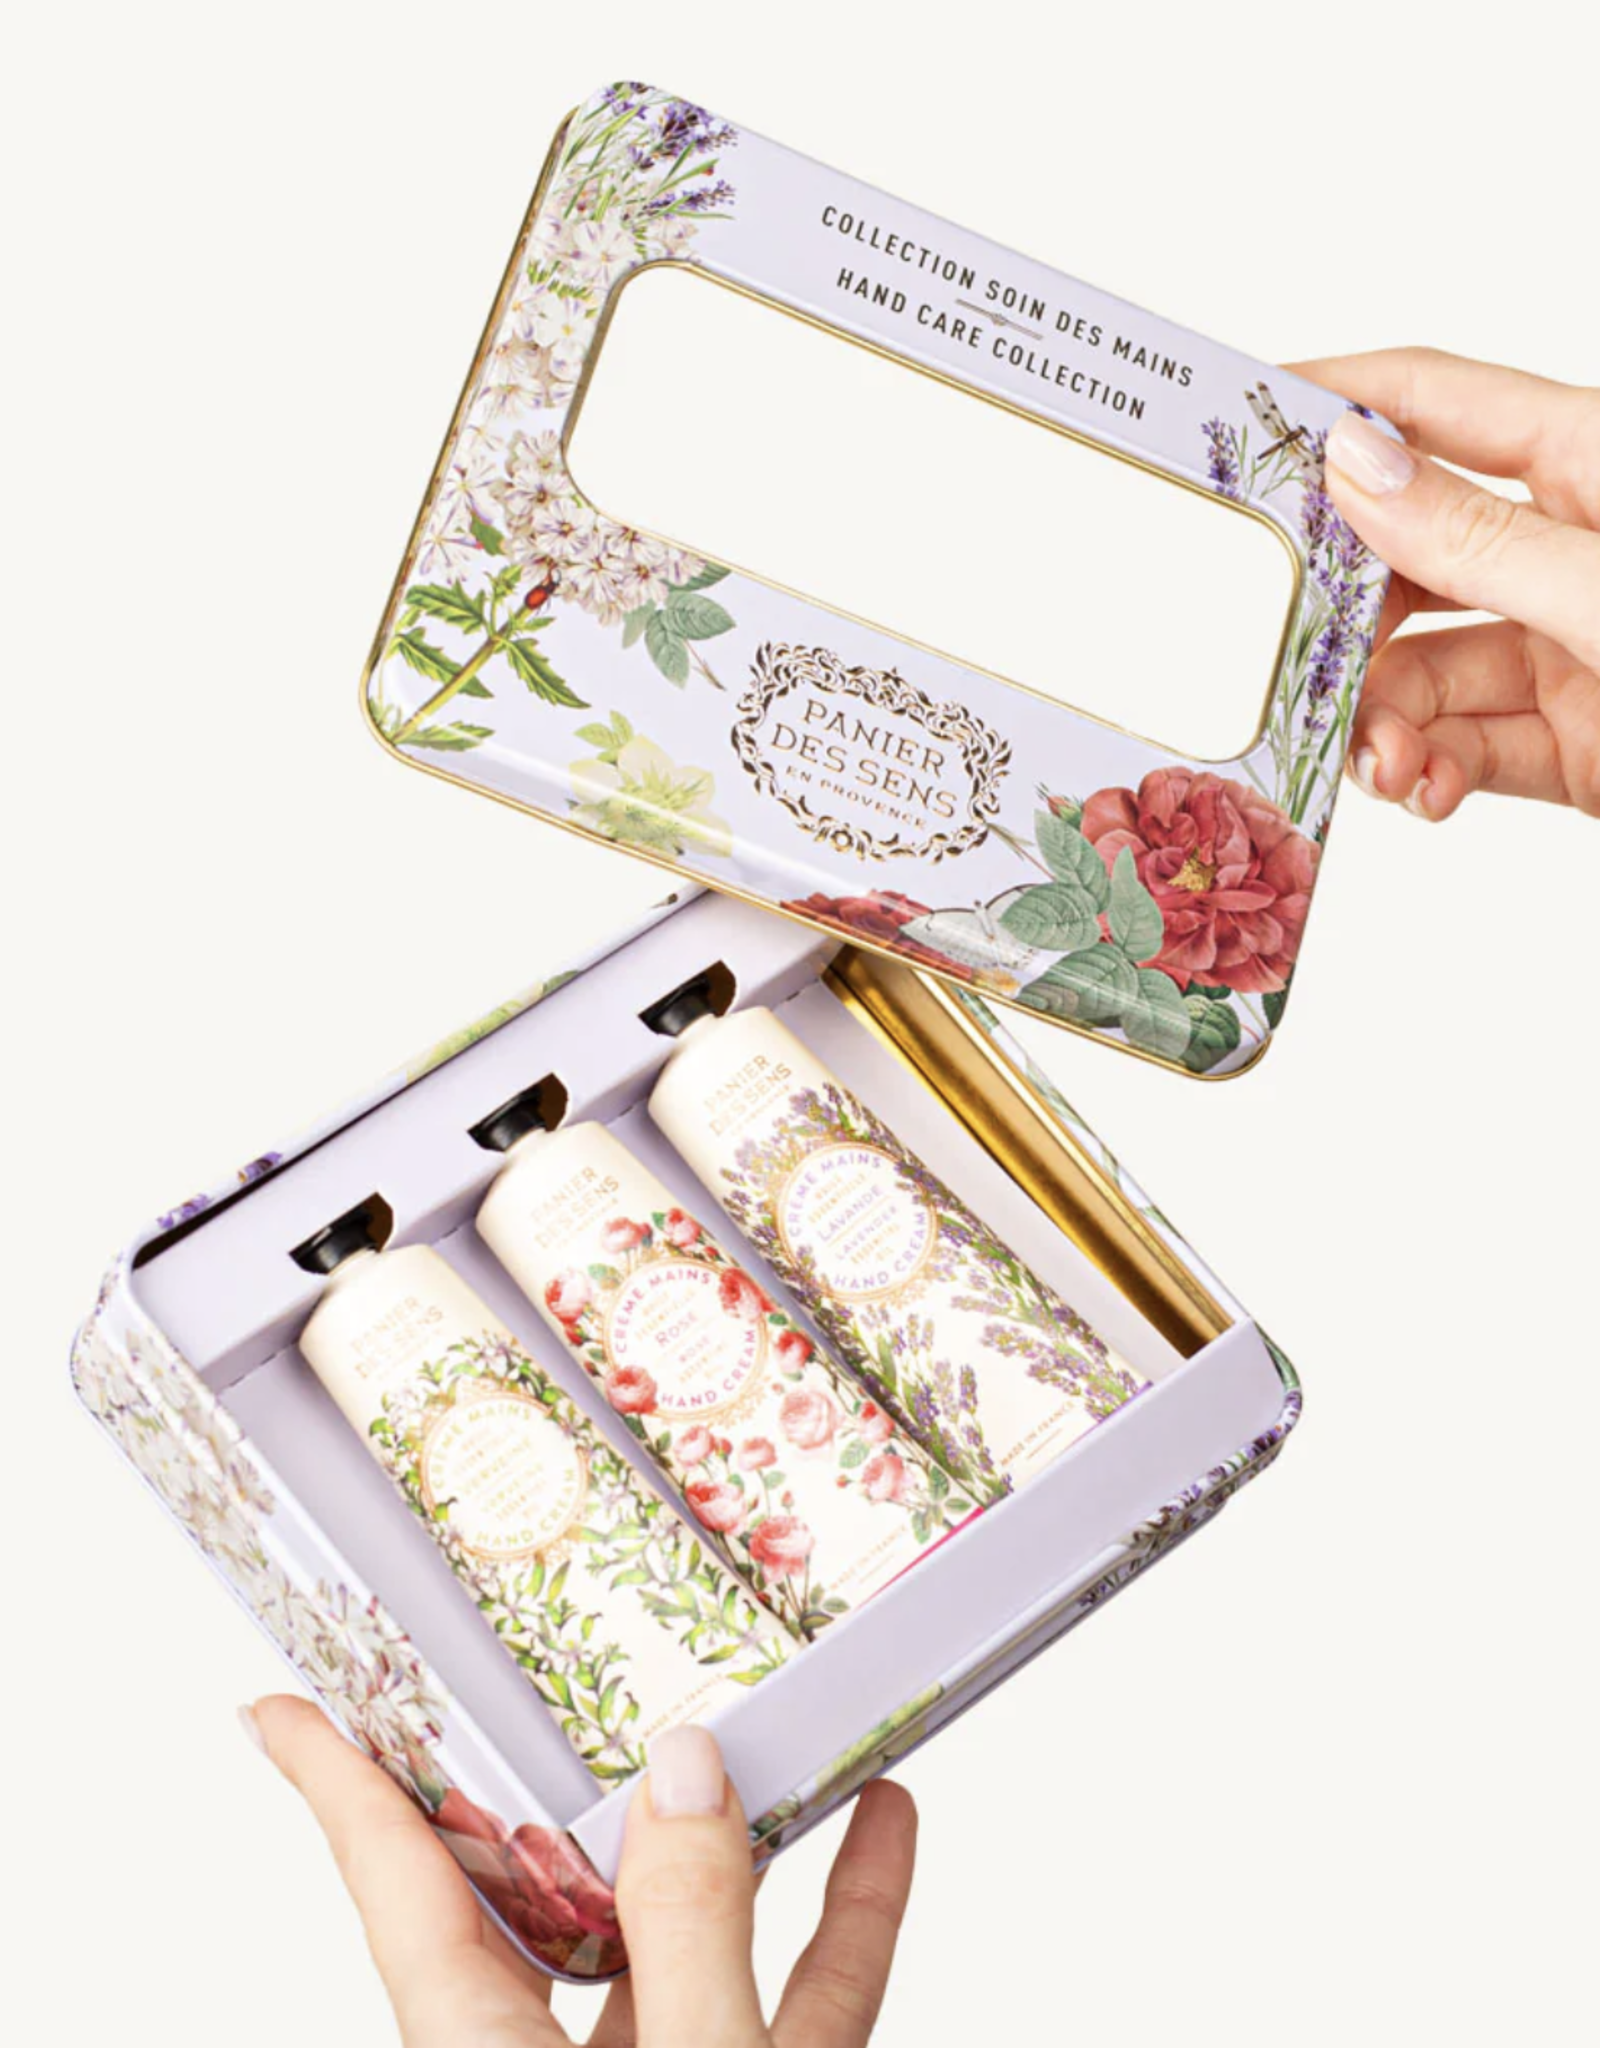 Panier Des Sens The Essentials Tin Hand Care Gift Set - Lavender, Provence, & Rose Hand Creams - Panier Des Sens